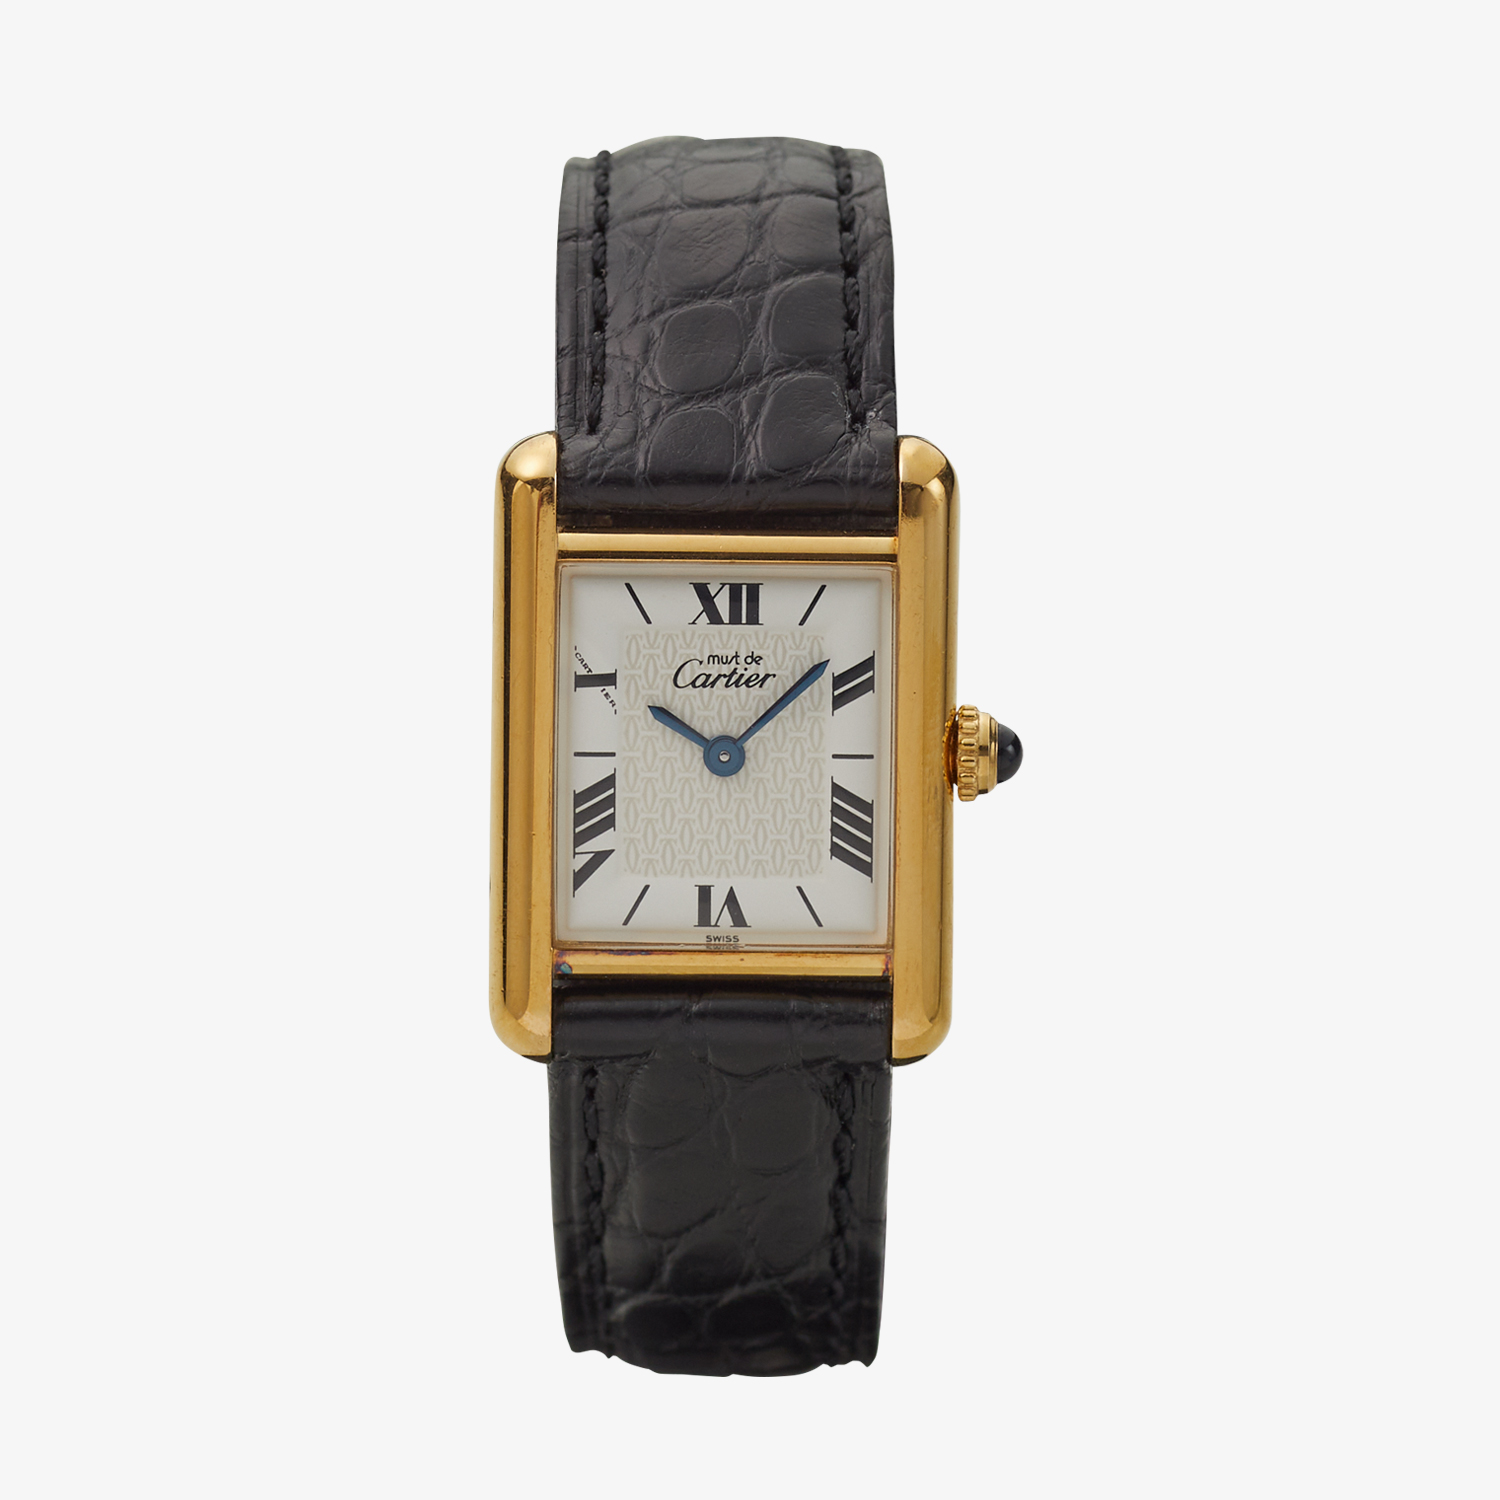 Cartier｜must de Cartier TANK SM｜Six Point Roman Dial｜White - 90's｜Cartier (Vintage Watch)